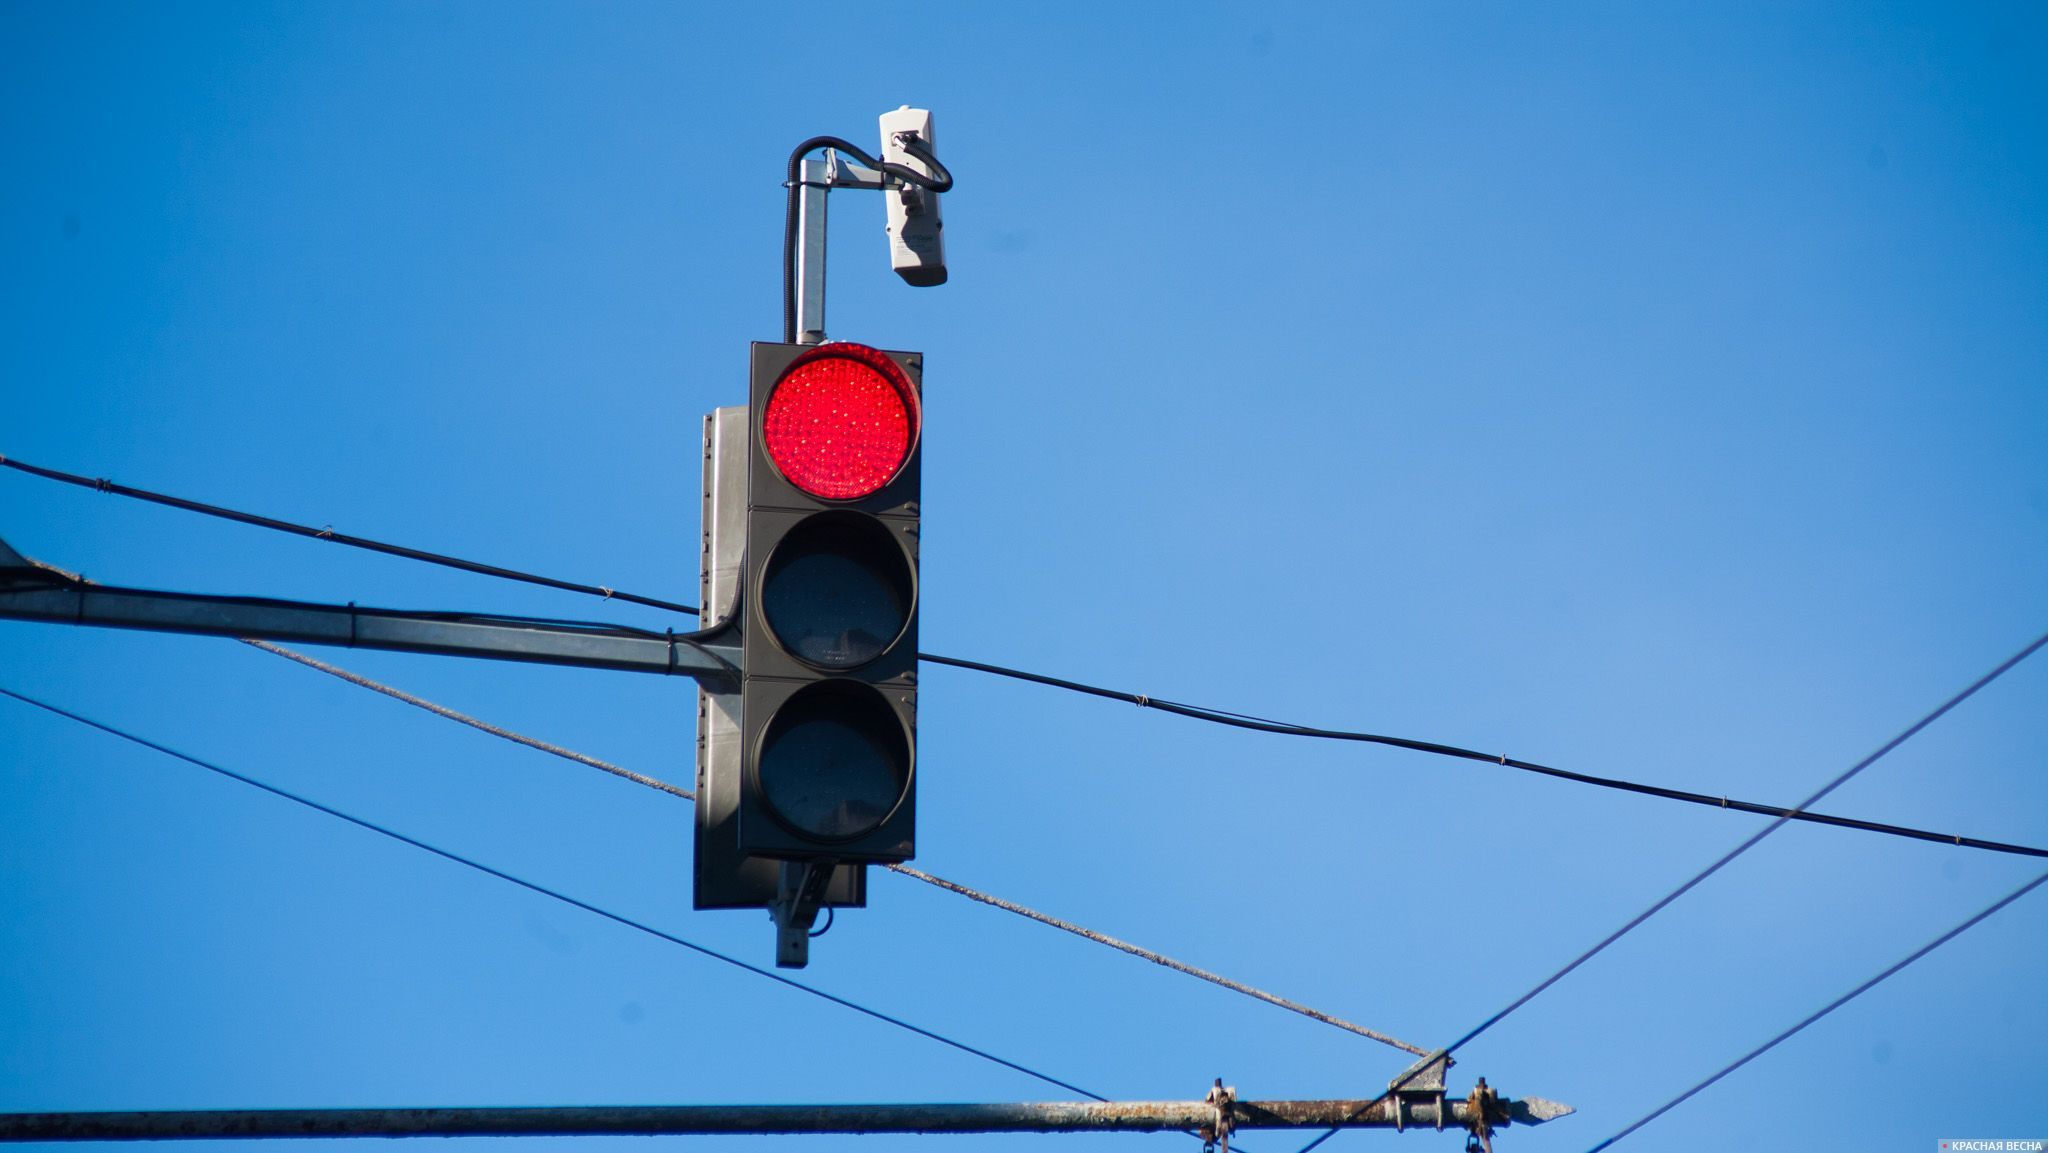 Traffic light red. Красный светофор. Красный сигнал светофора. Запрещающий сигнал светофора. Красный цвет светофора.